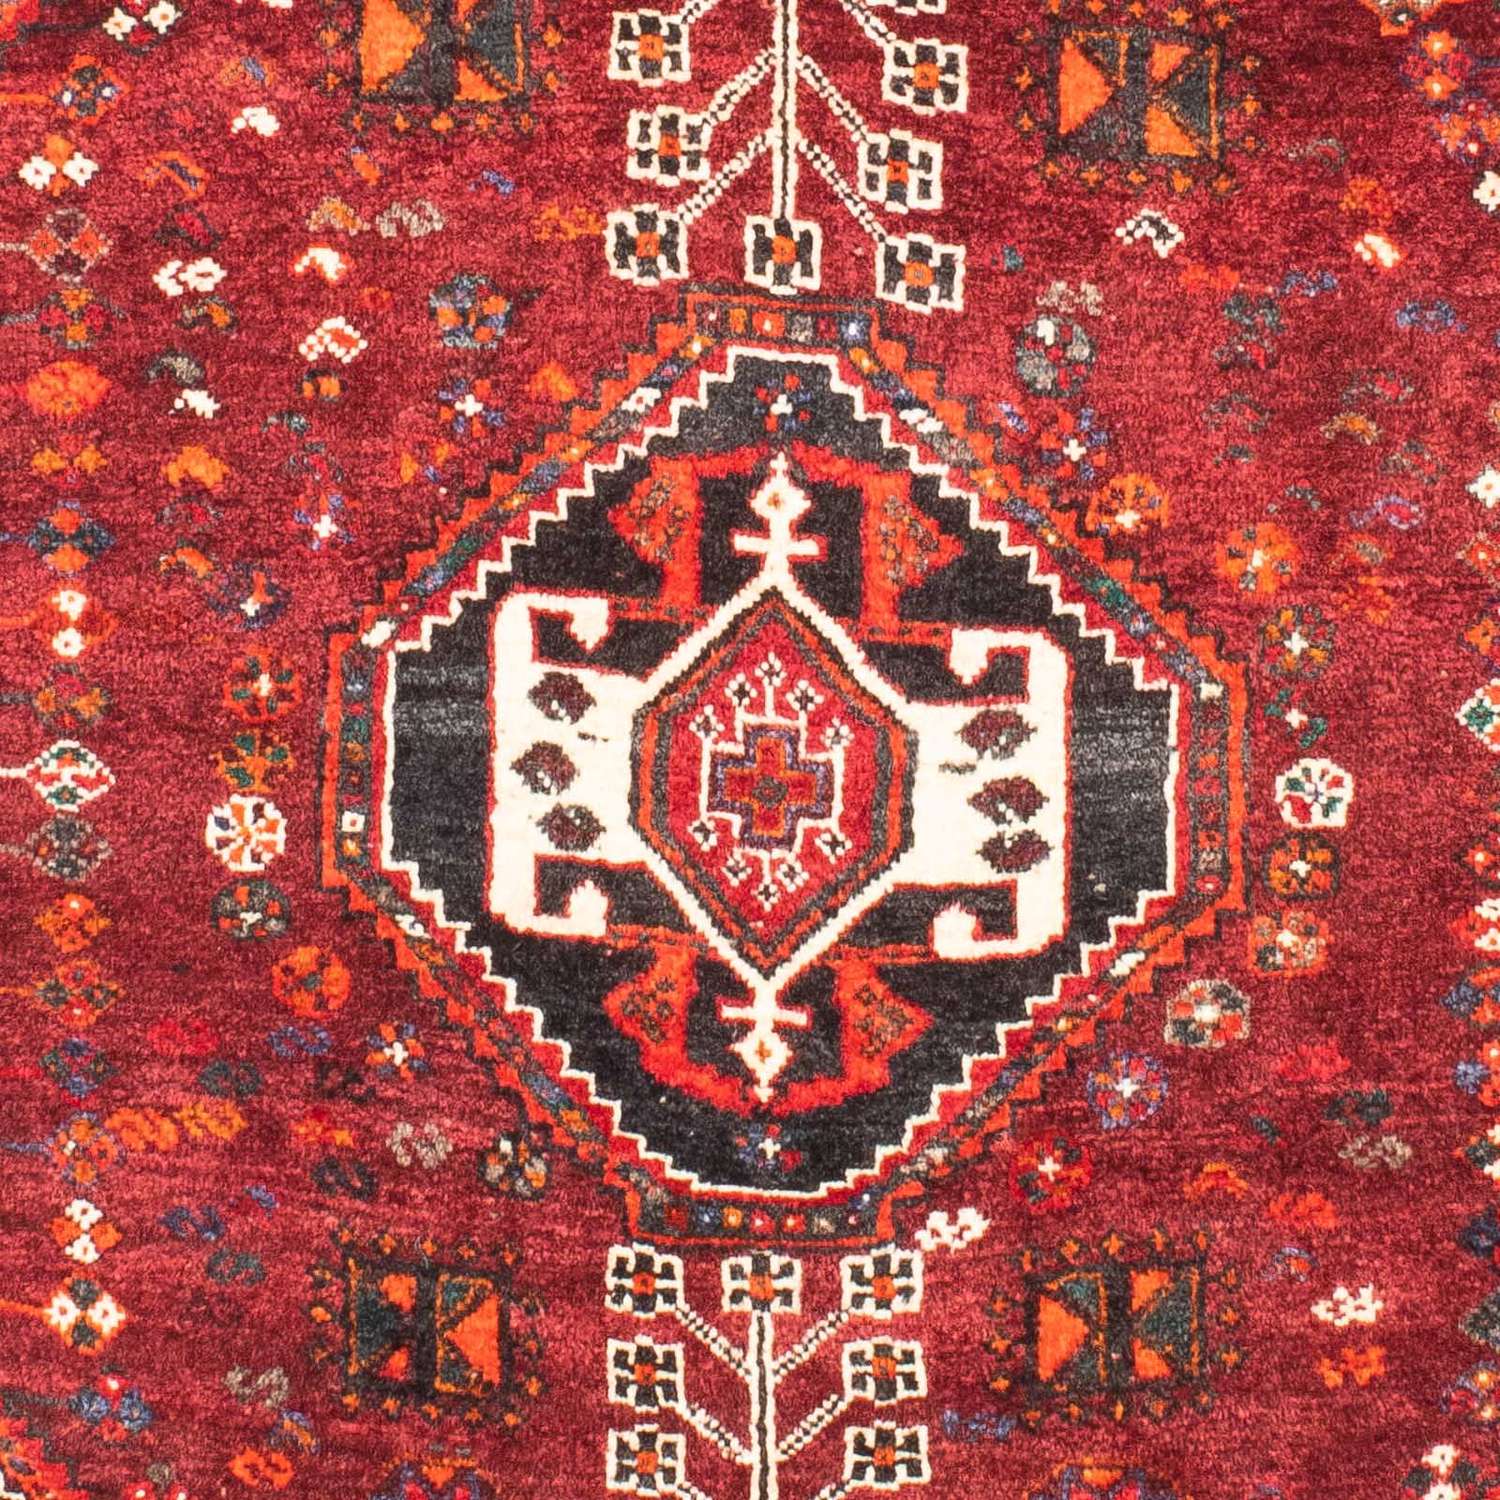 Persisk matta - Nomadic - 148 x 108 cm - mörkröd